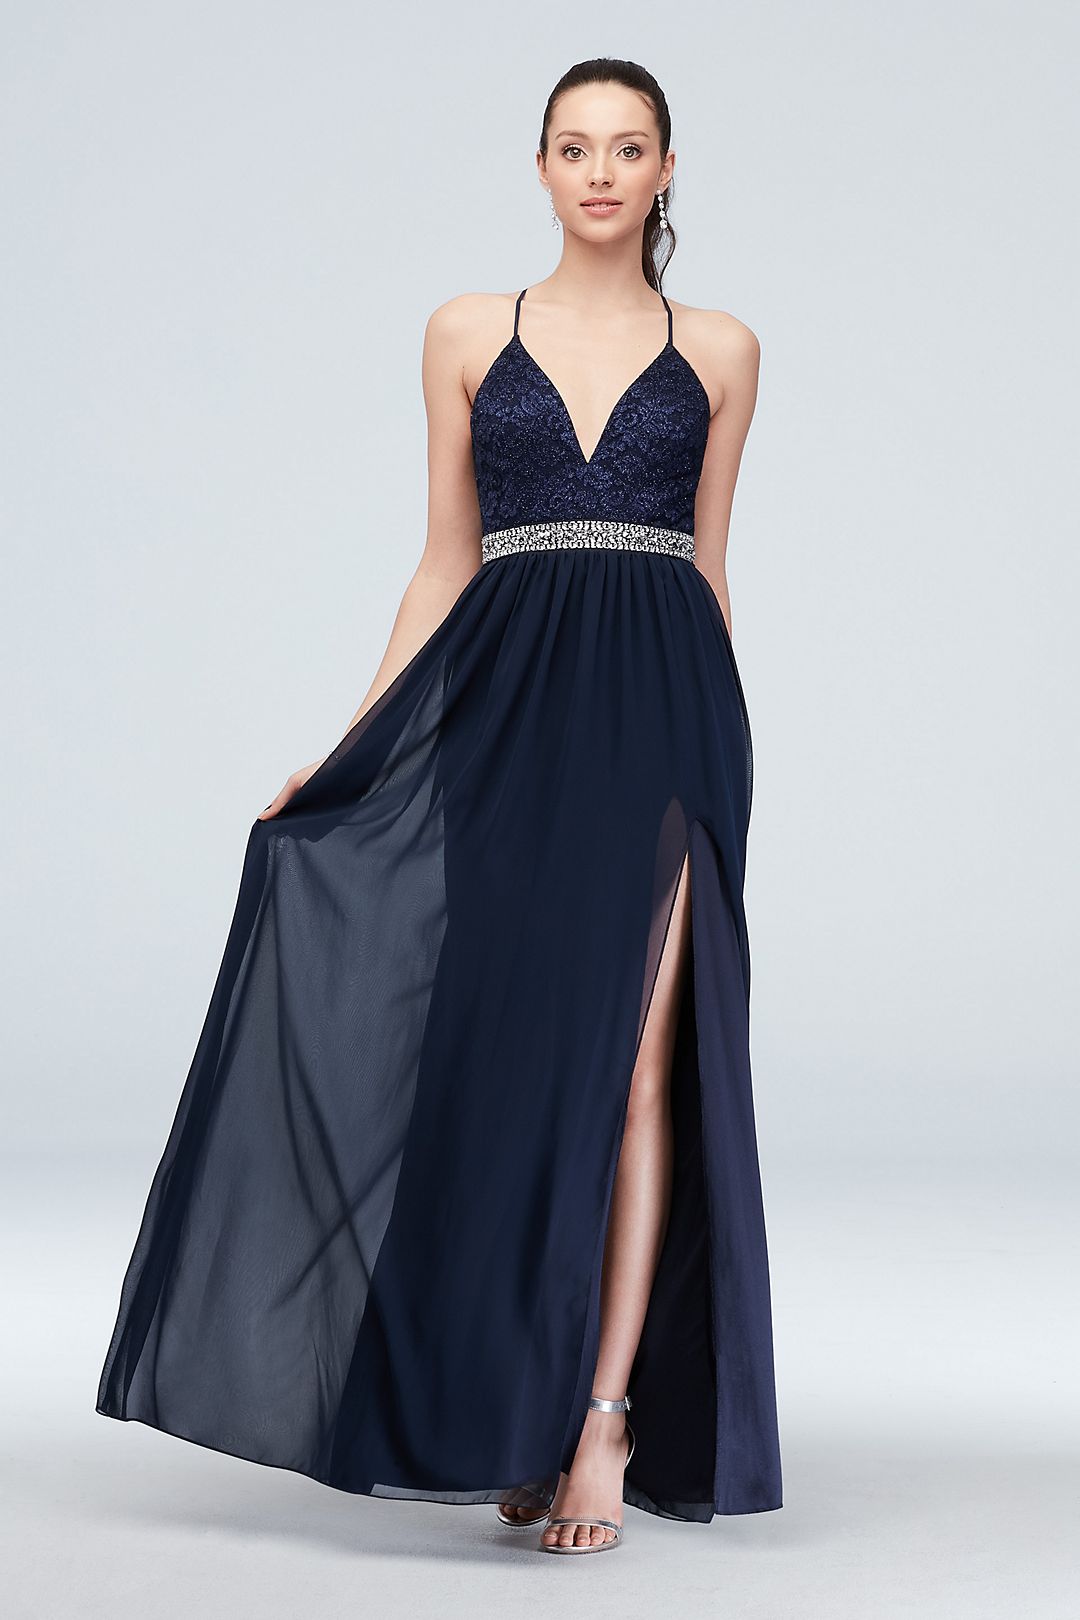 Glittery Lace Deep-V Skinny-Strap Dress with Belt Image 1